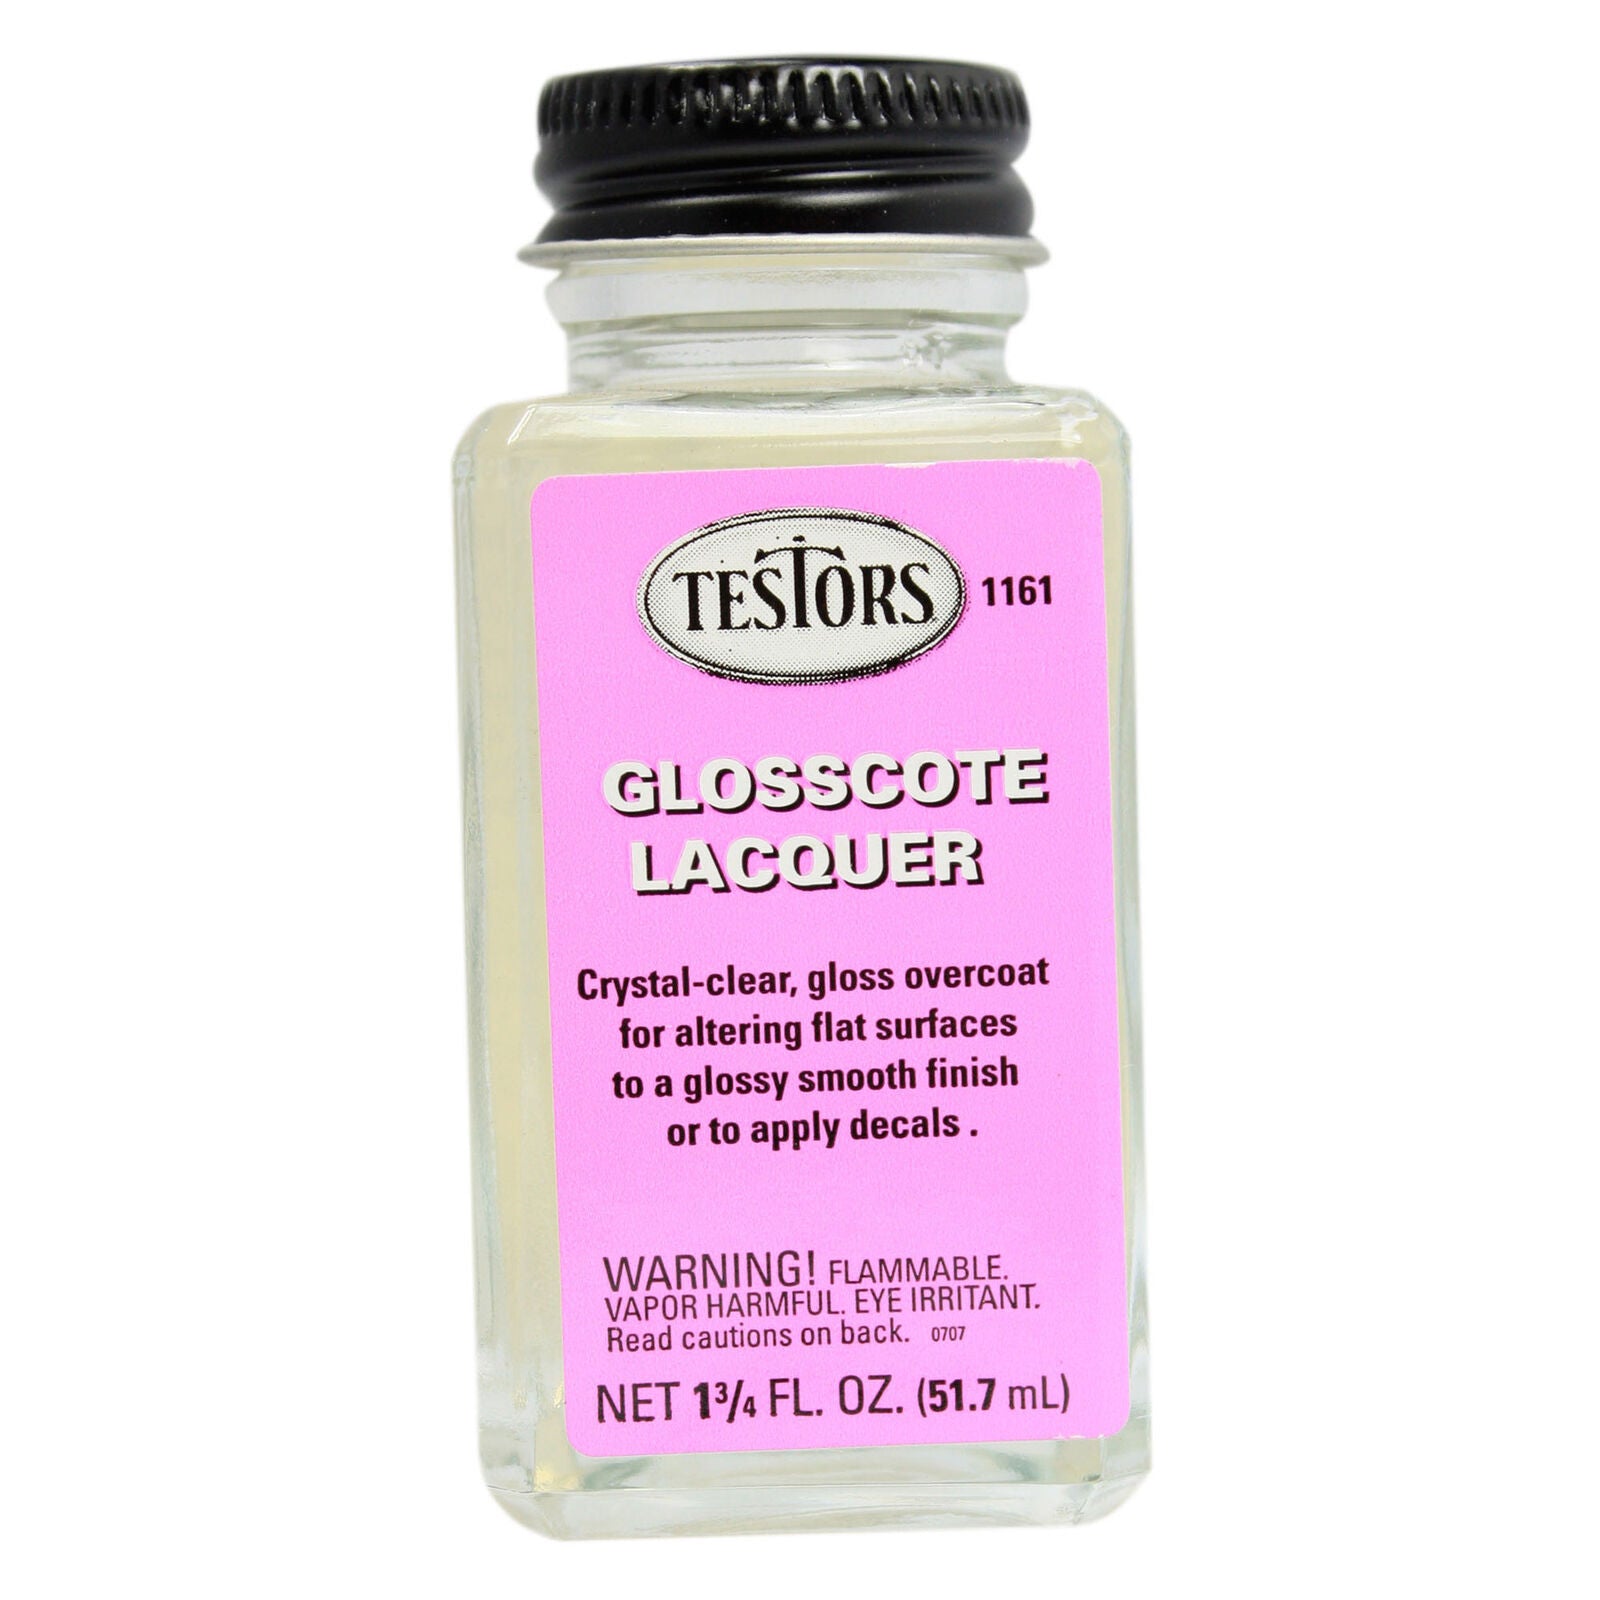 TESTORS 1161 Clear Gloss Glosscote 1-3/4 oz